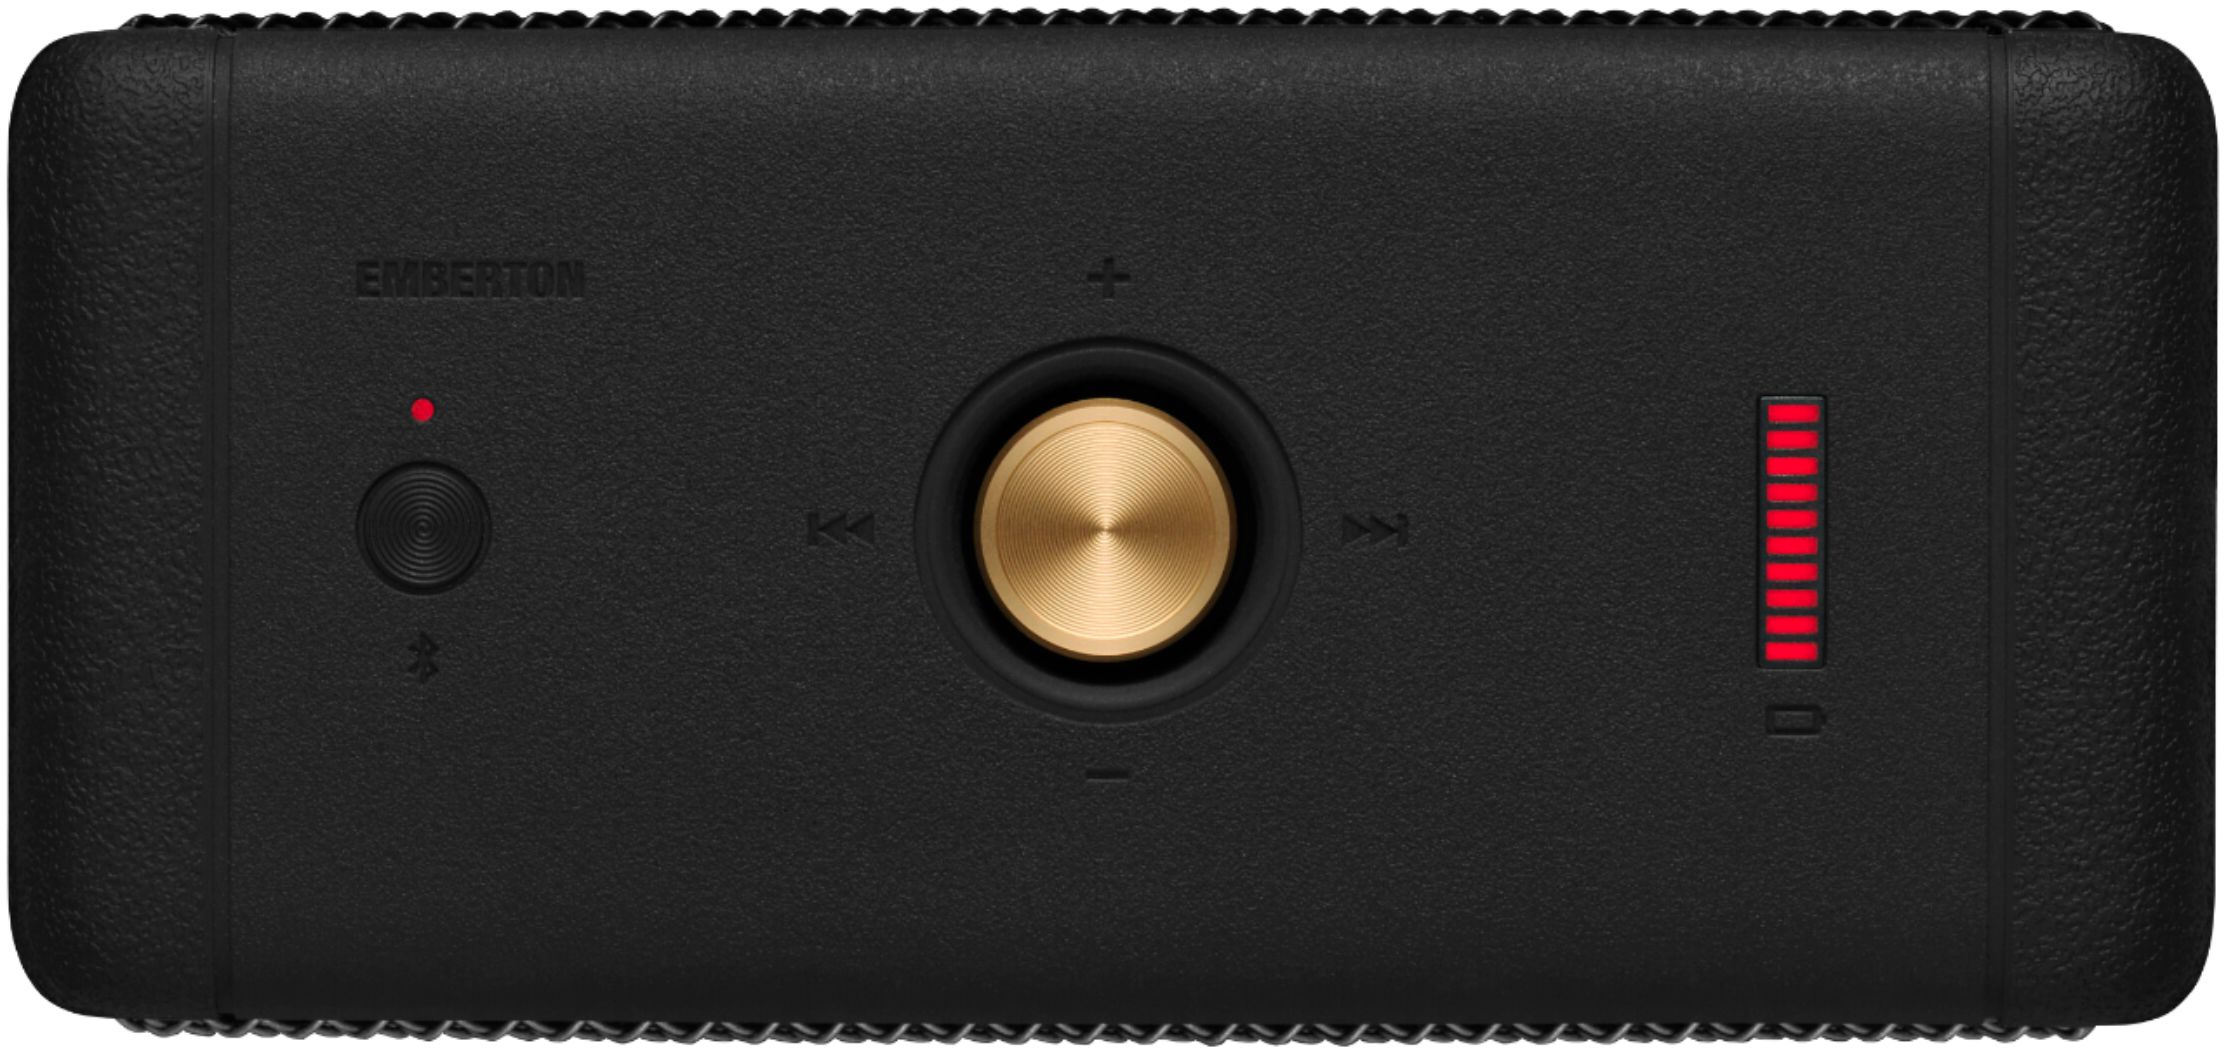 Marshall Emberton Portable Speaker Best Black 1001908 Buy - Bluetooth